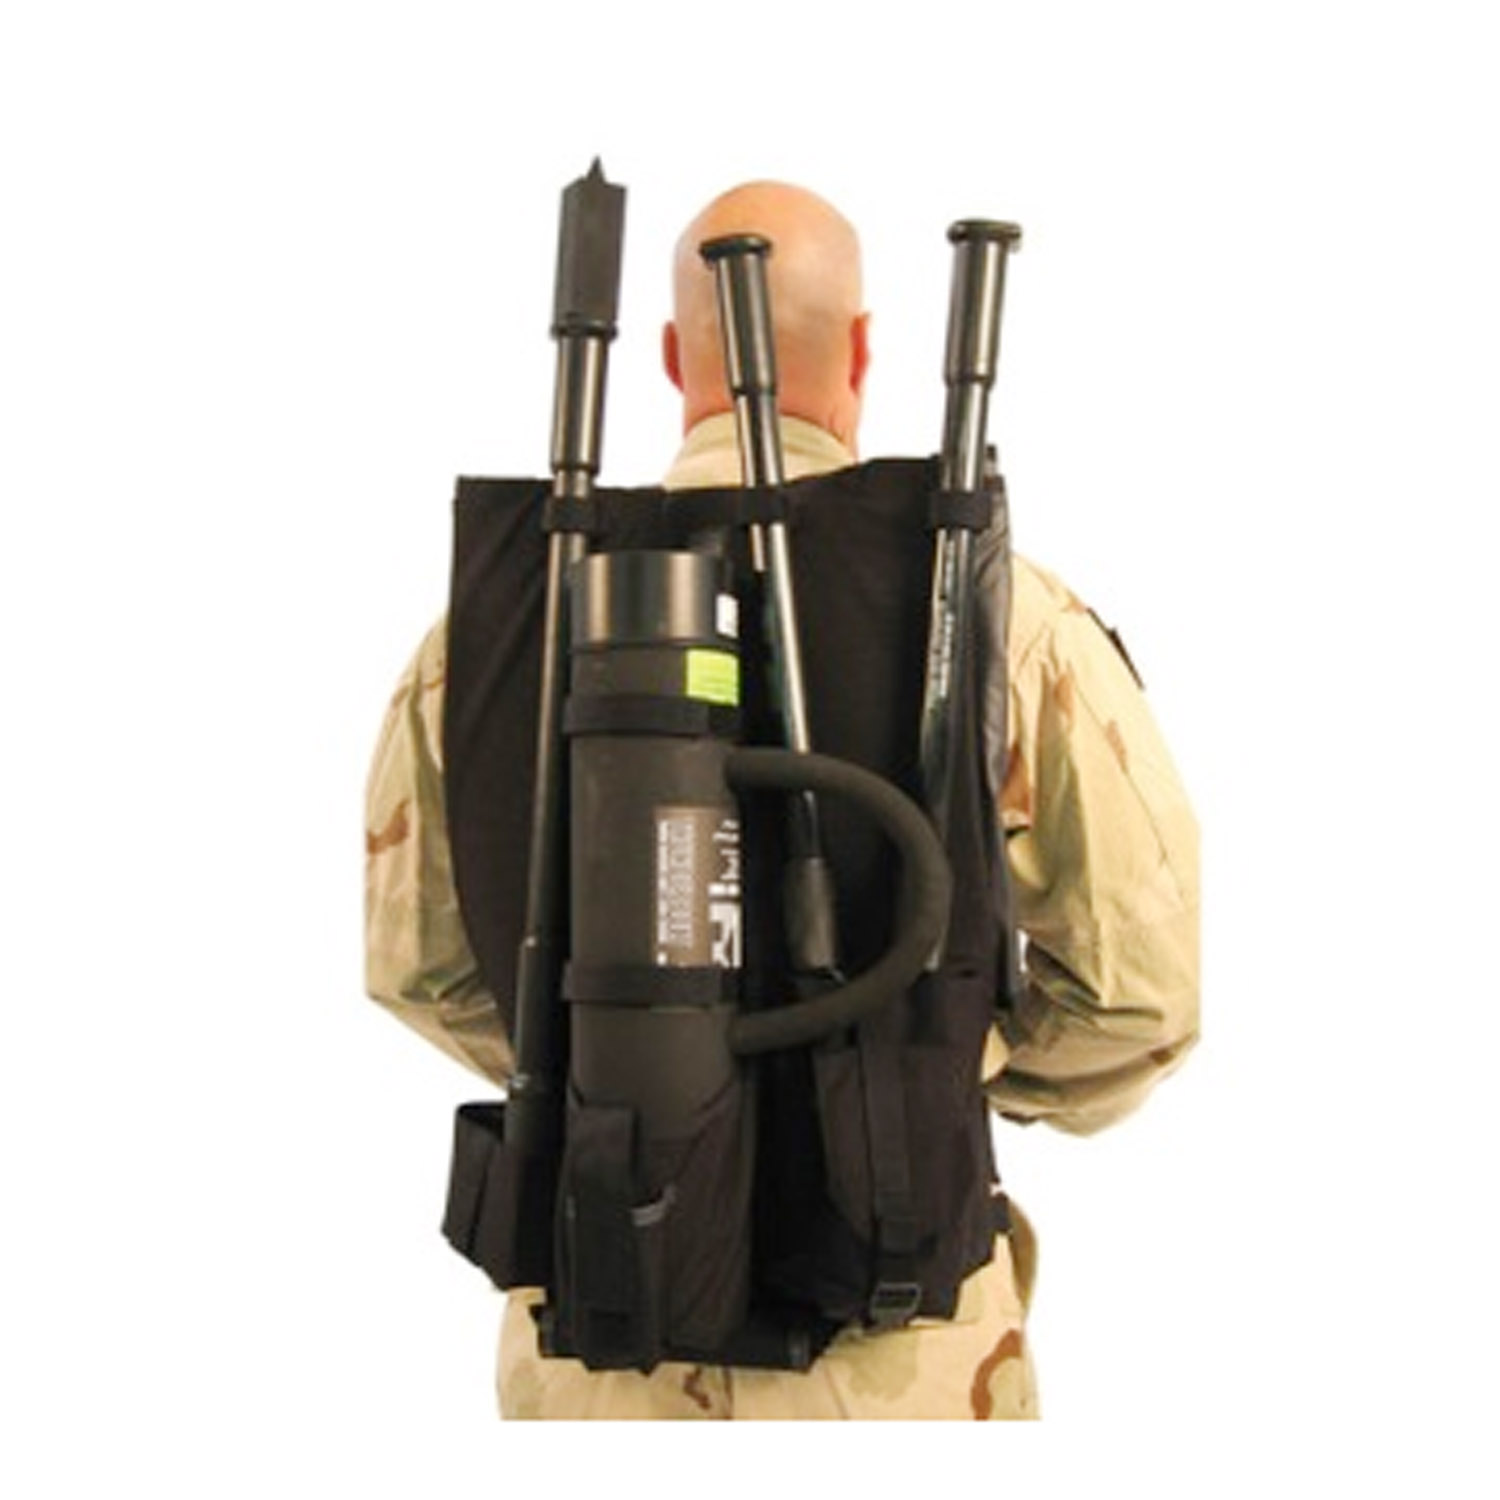 BlackHawk UK MOE Backpack Kit Complete